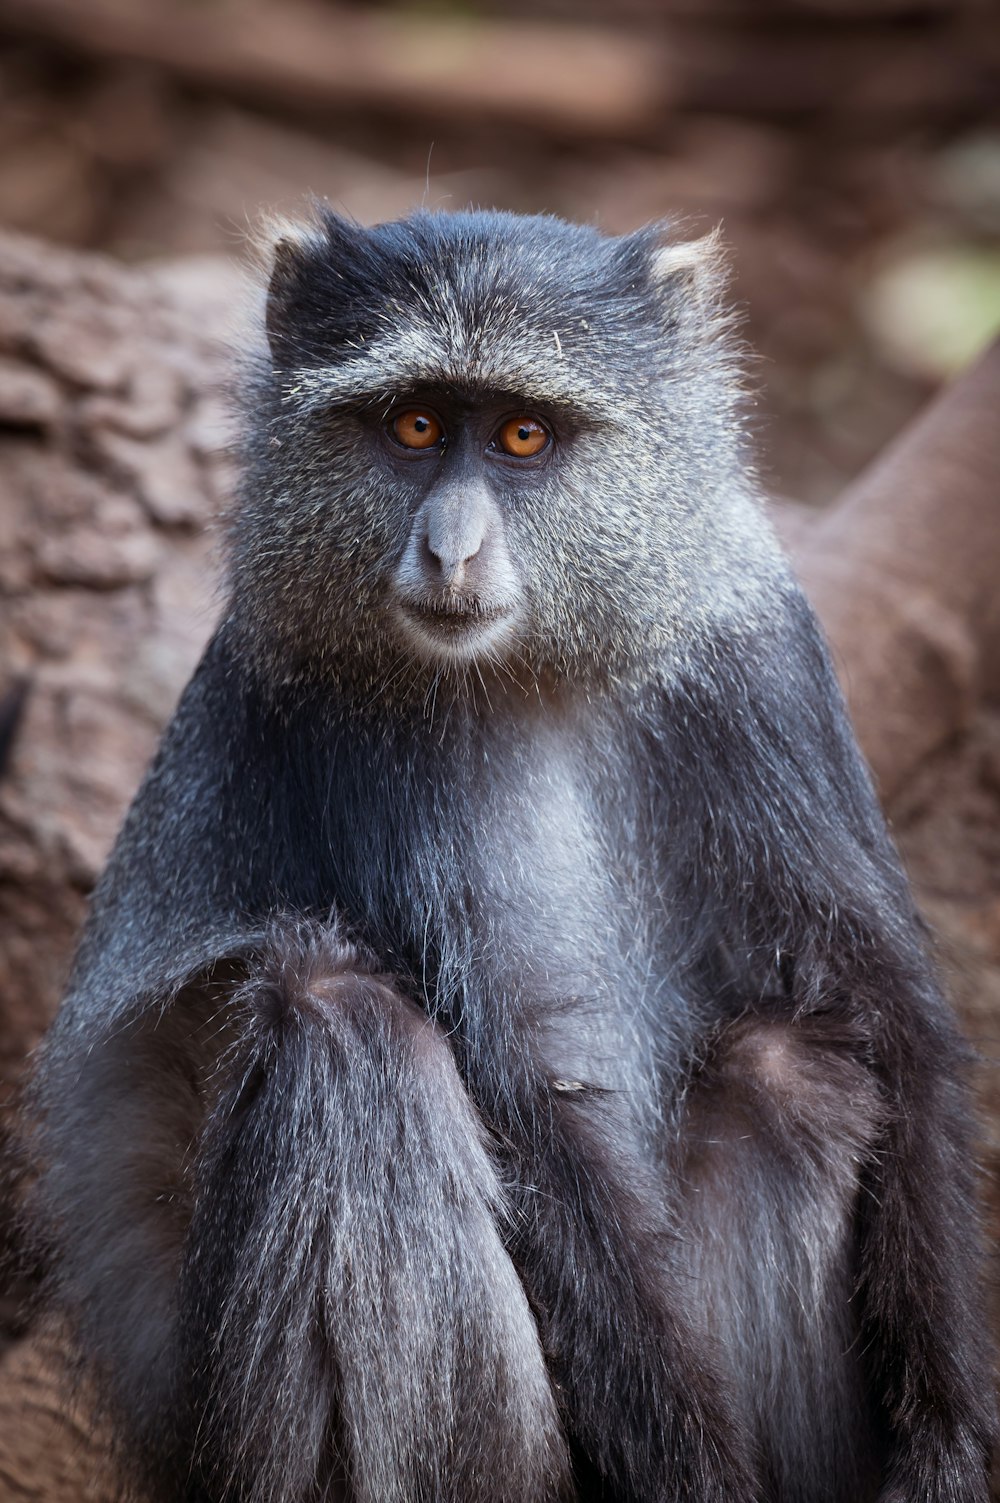 a close up of a monkey sitting on a rock